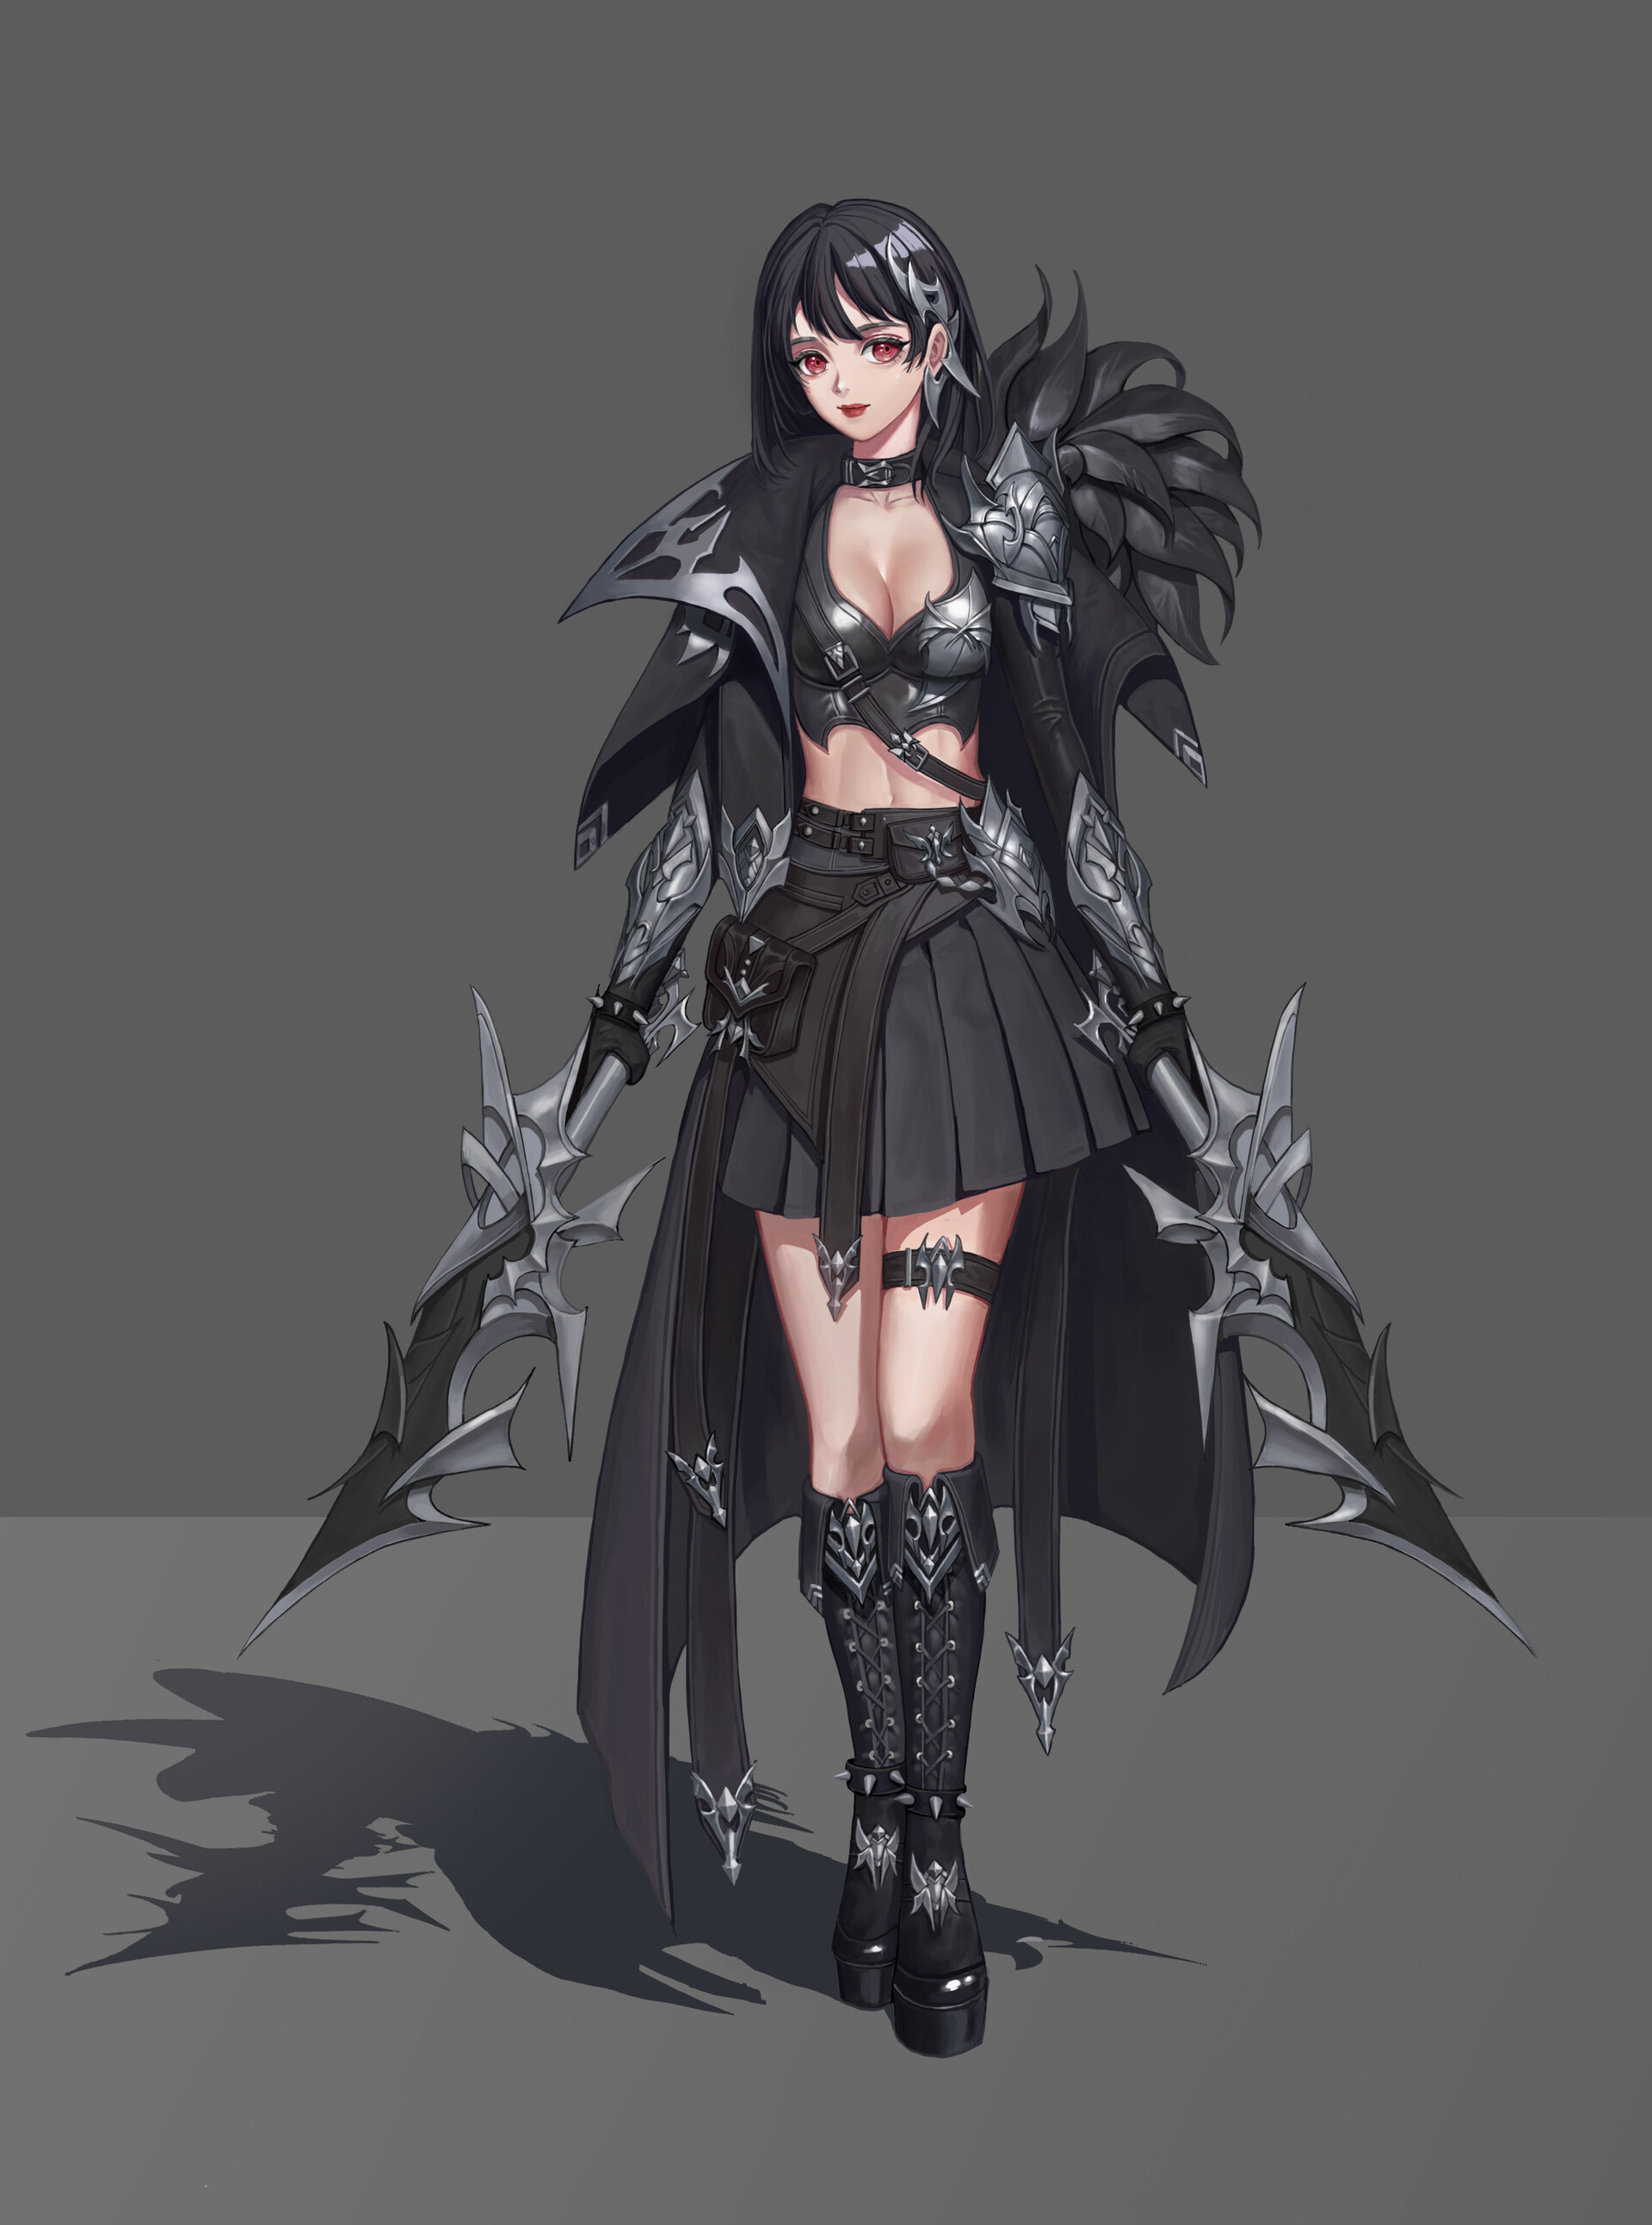 ArtStation - Assassin Female Outfit